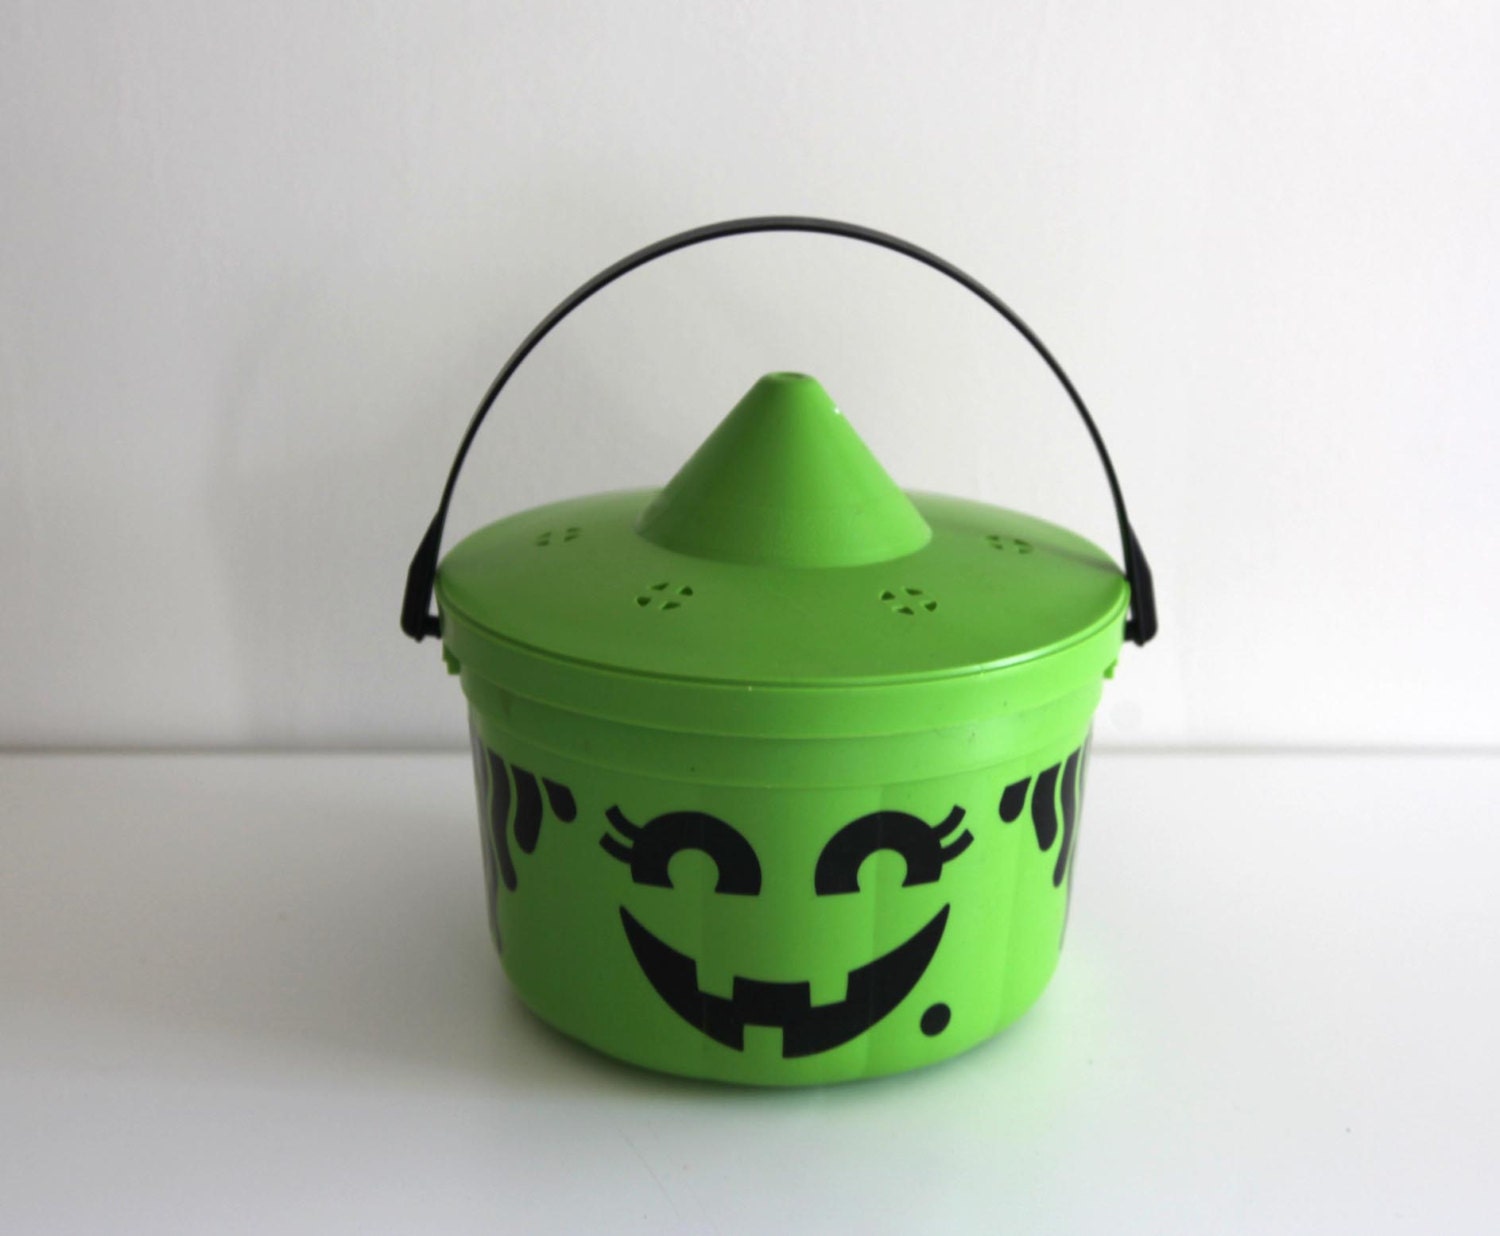 mcdonalds halloween buckets